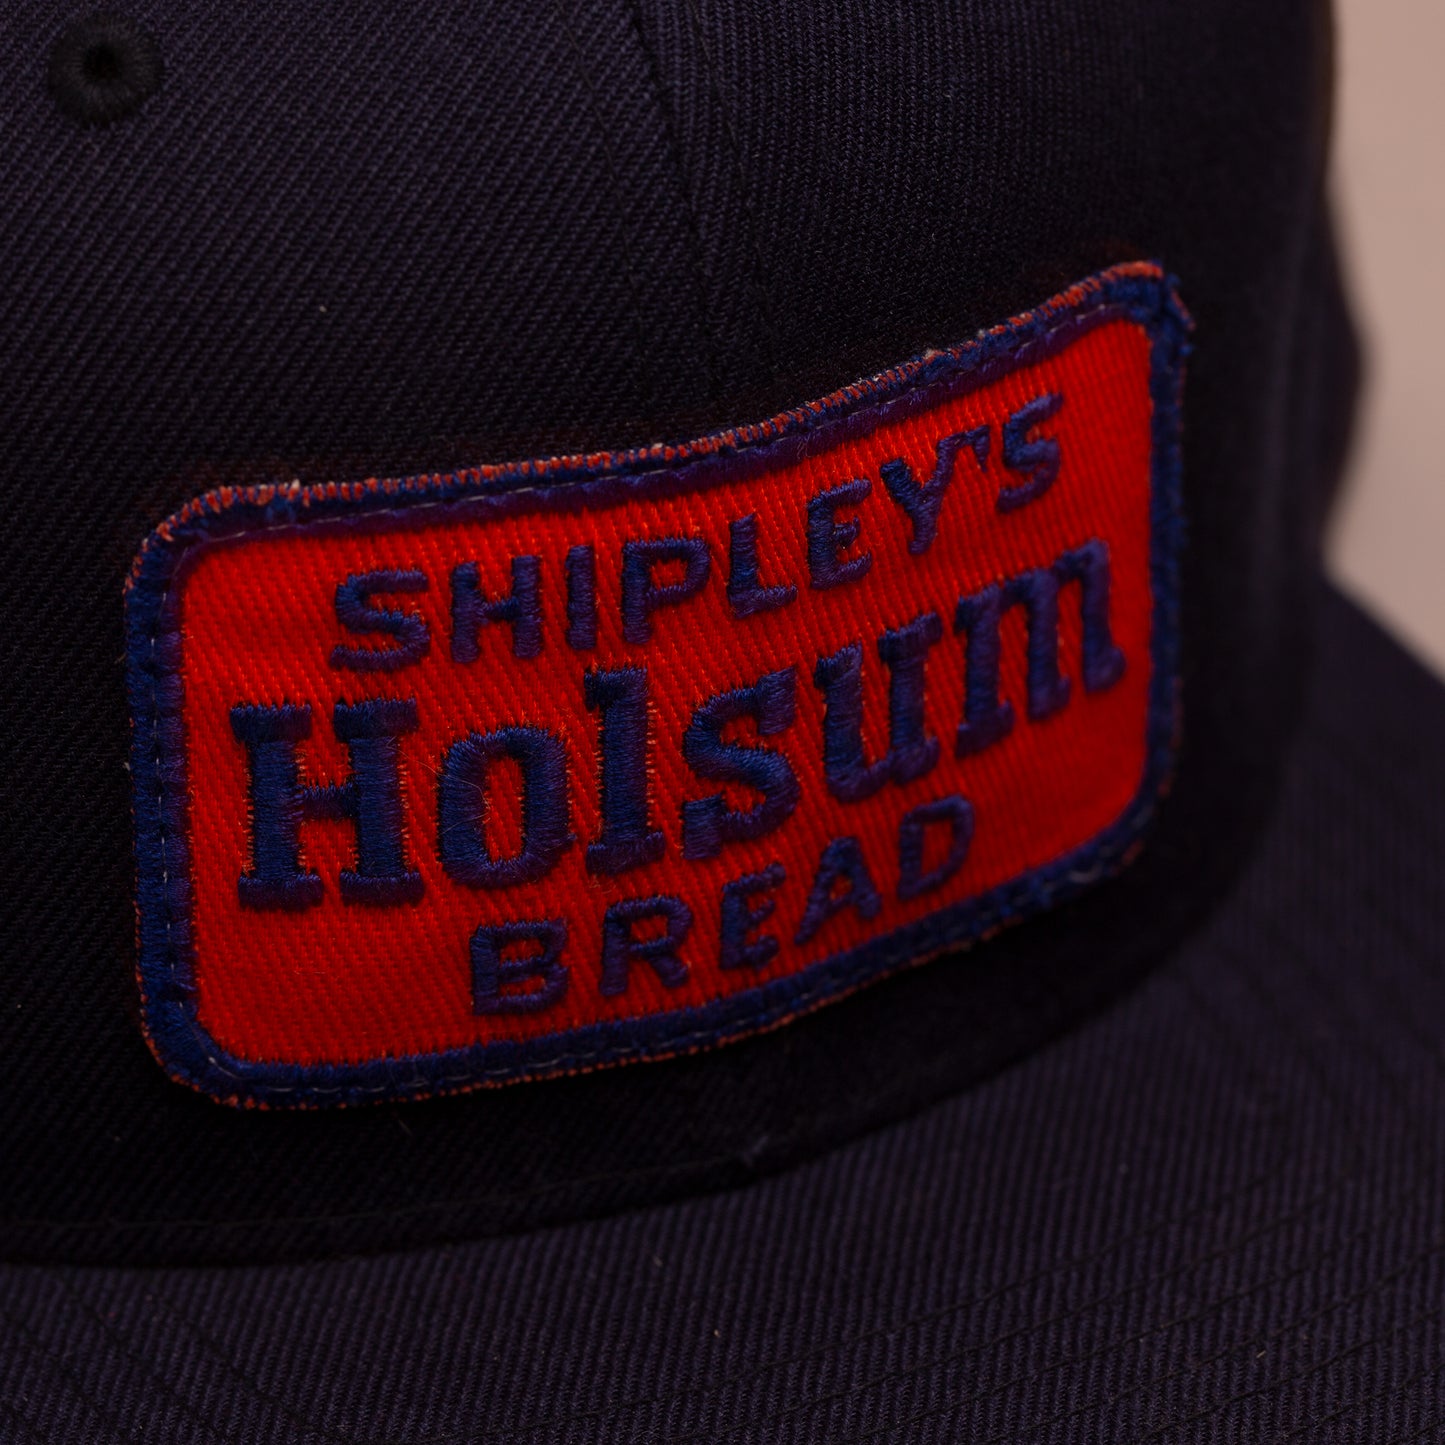 Holsum Bread